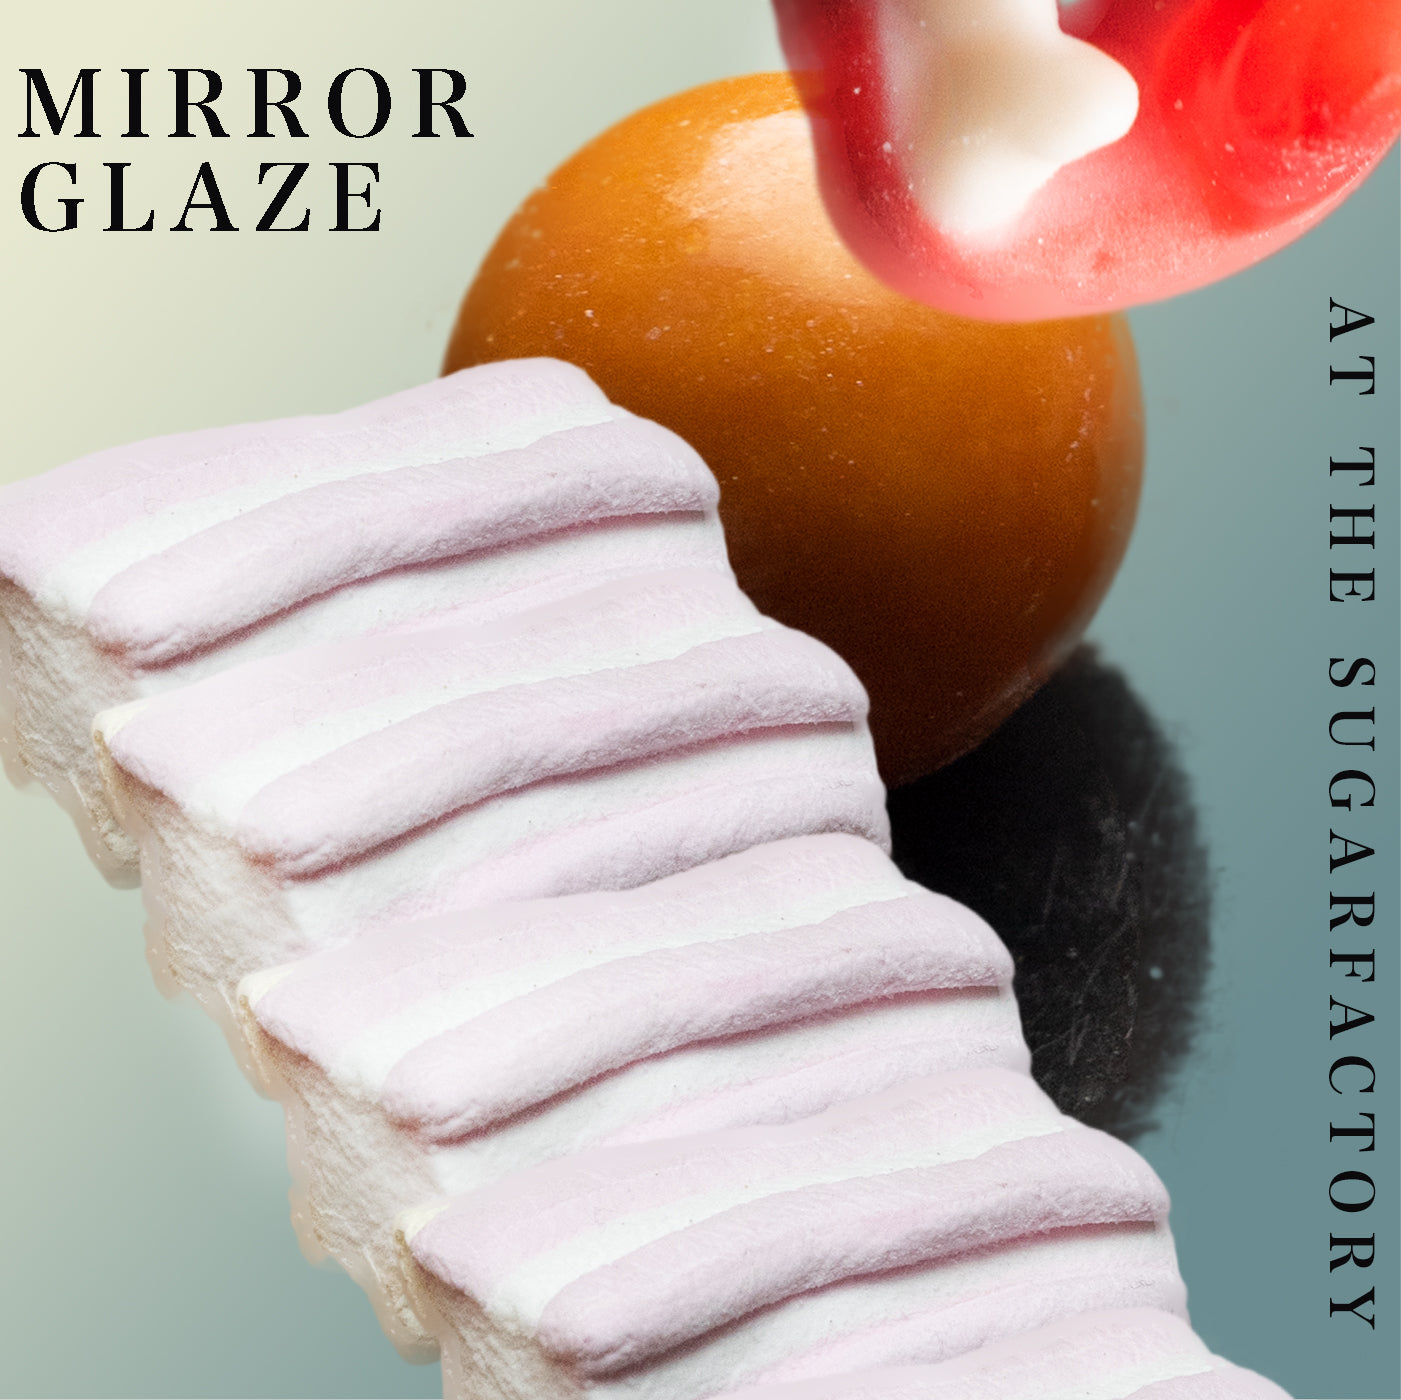 Mirror Glaze - At the Sugar Factory